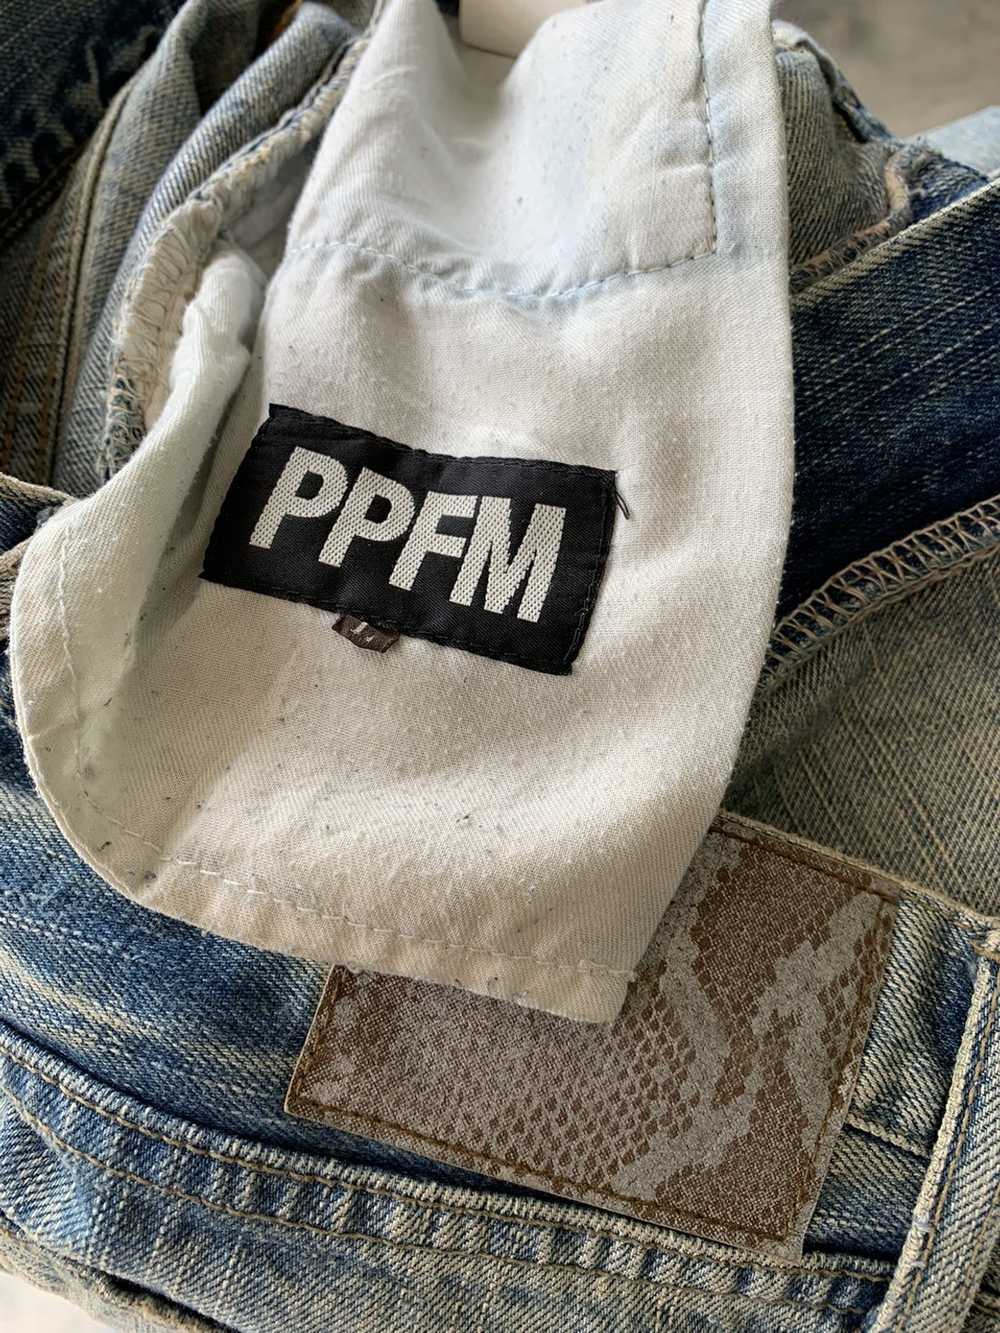 PPFM PPFM Distressed Denim Jeans - image 11